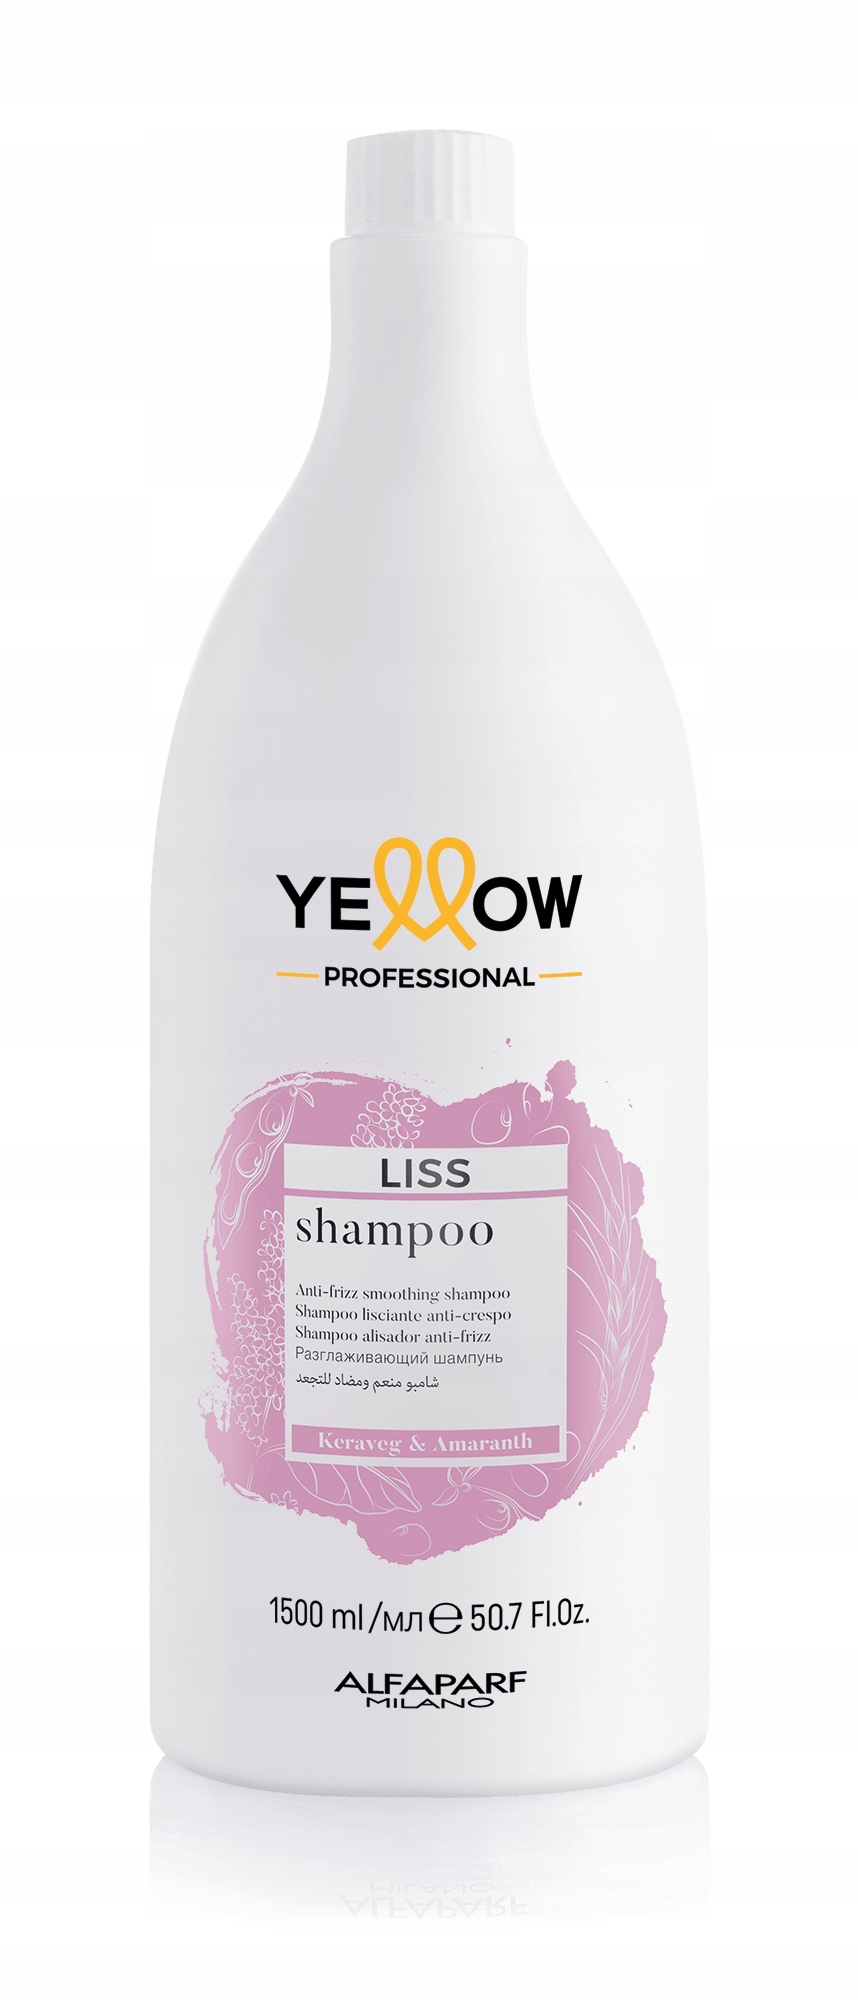 szampon yellow liss